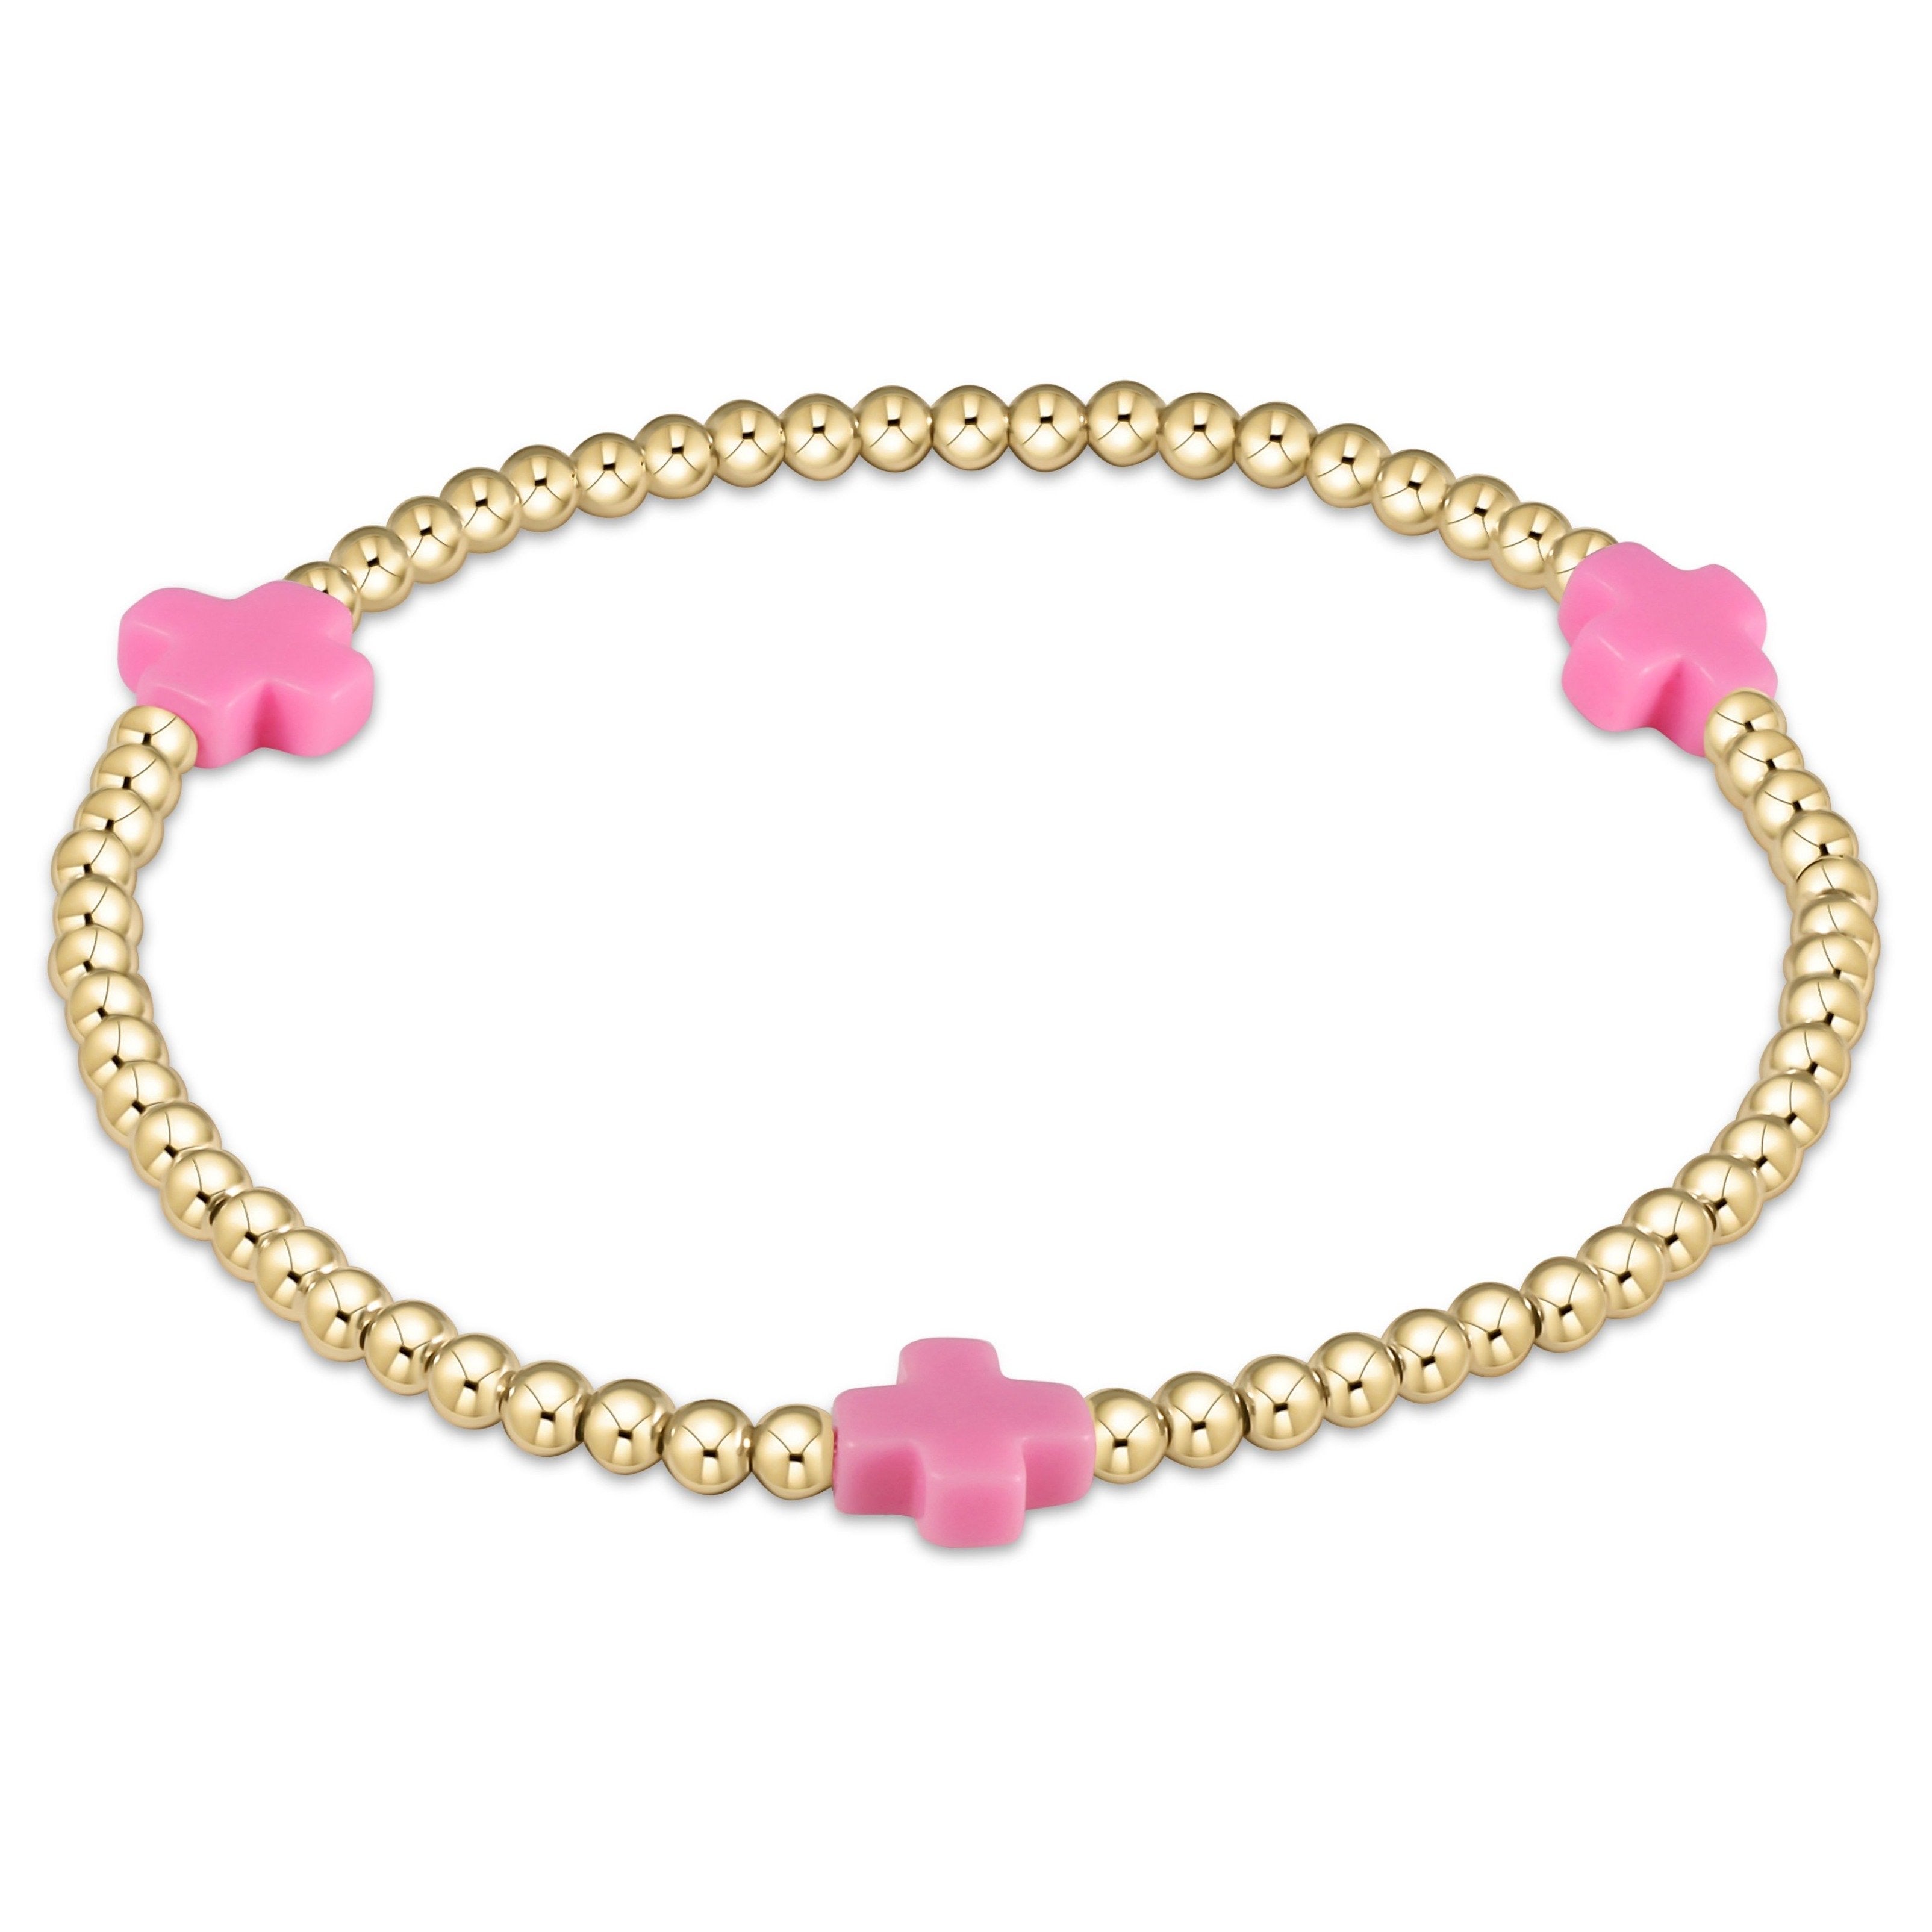 Signature Cross Pattern 3mm Bead Bracelet- Bright Pink